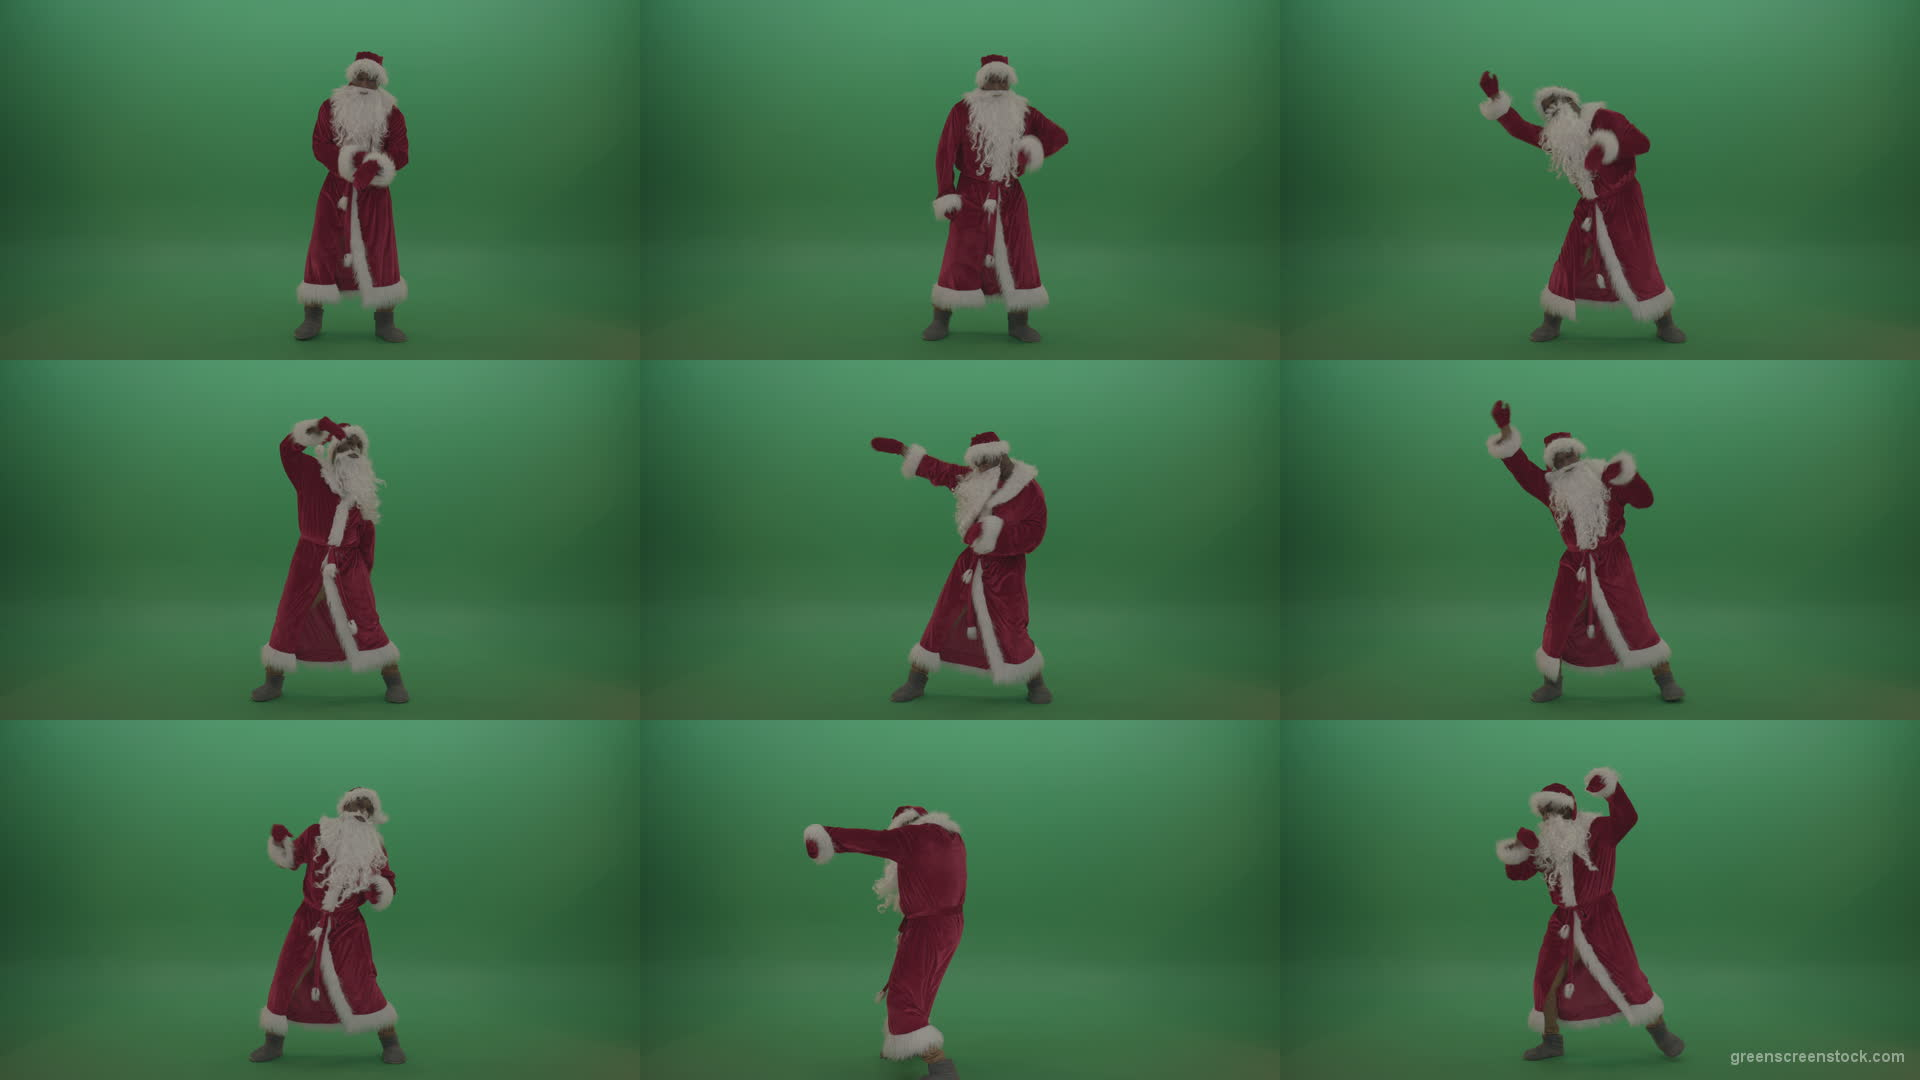 Crazy-santa-moves-over-chromakey-background Green Screen Stock